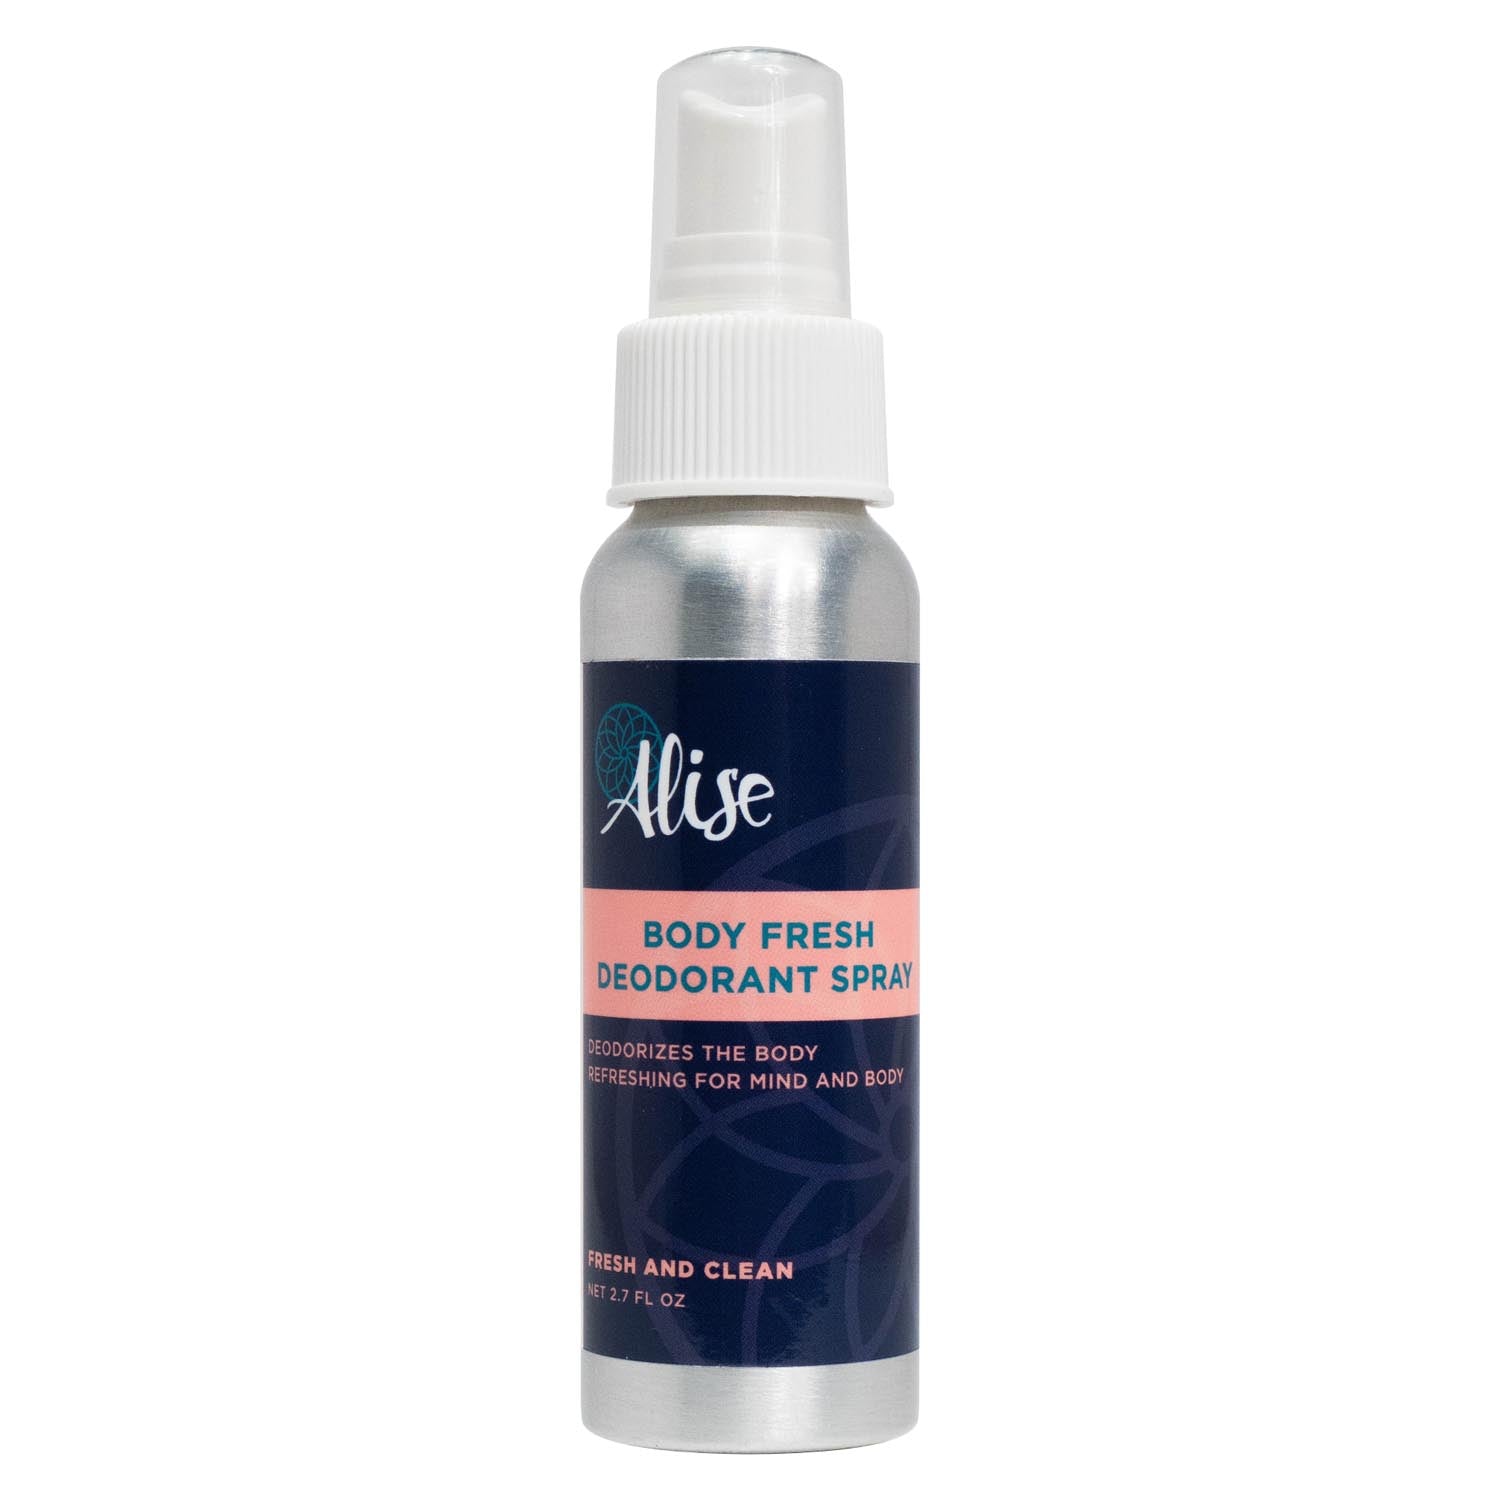 Stay Fresh Body Deodorant Spray 2.7oz handcrafted by Alise Body Care